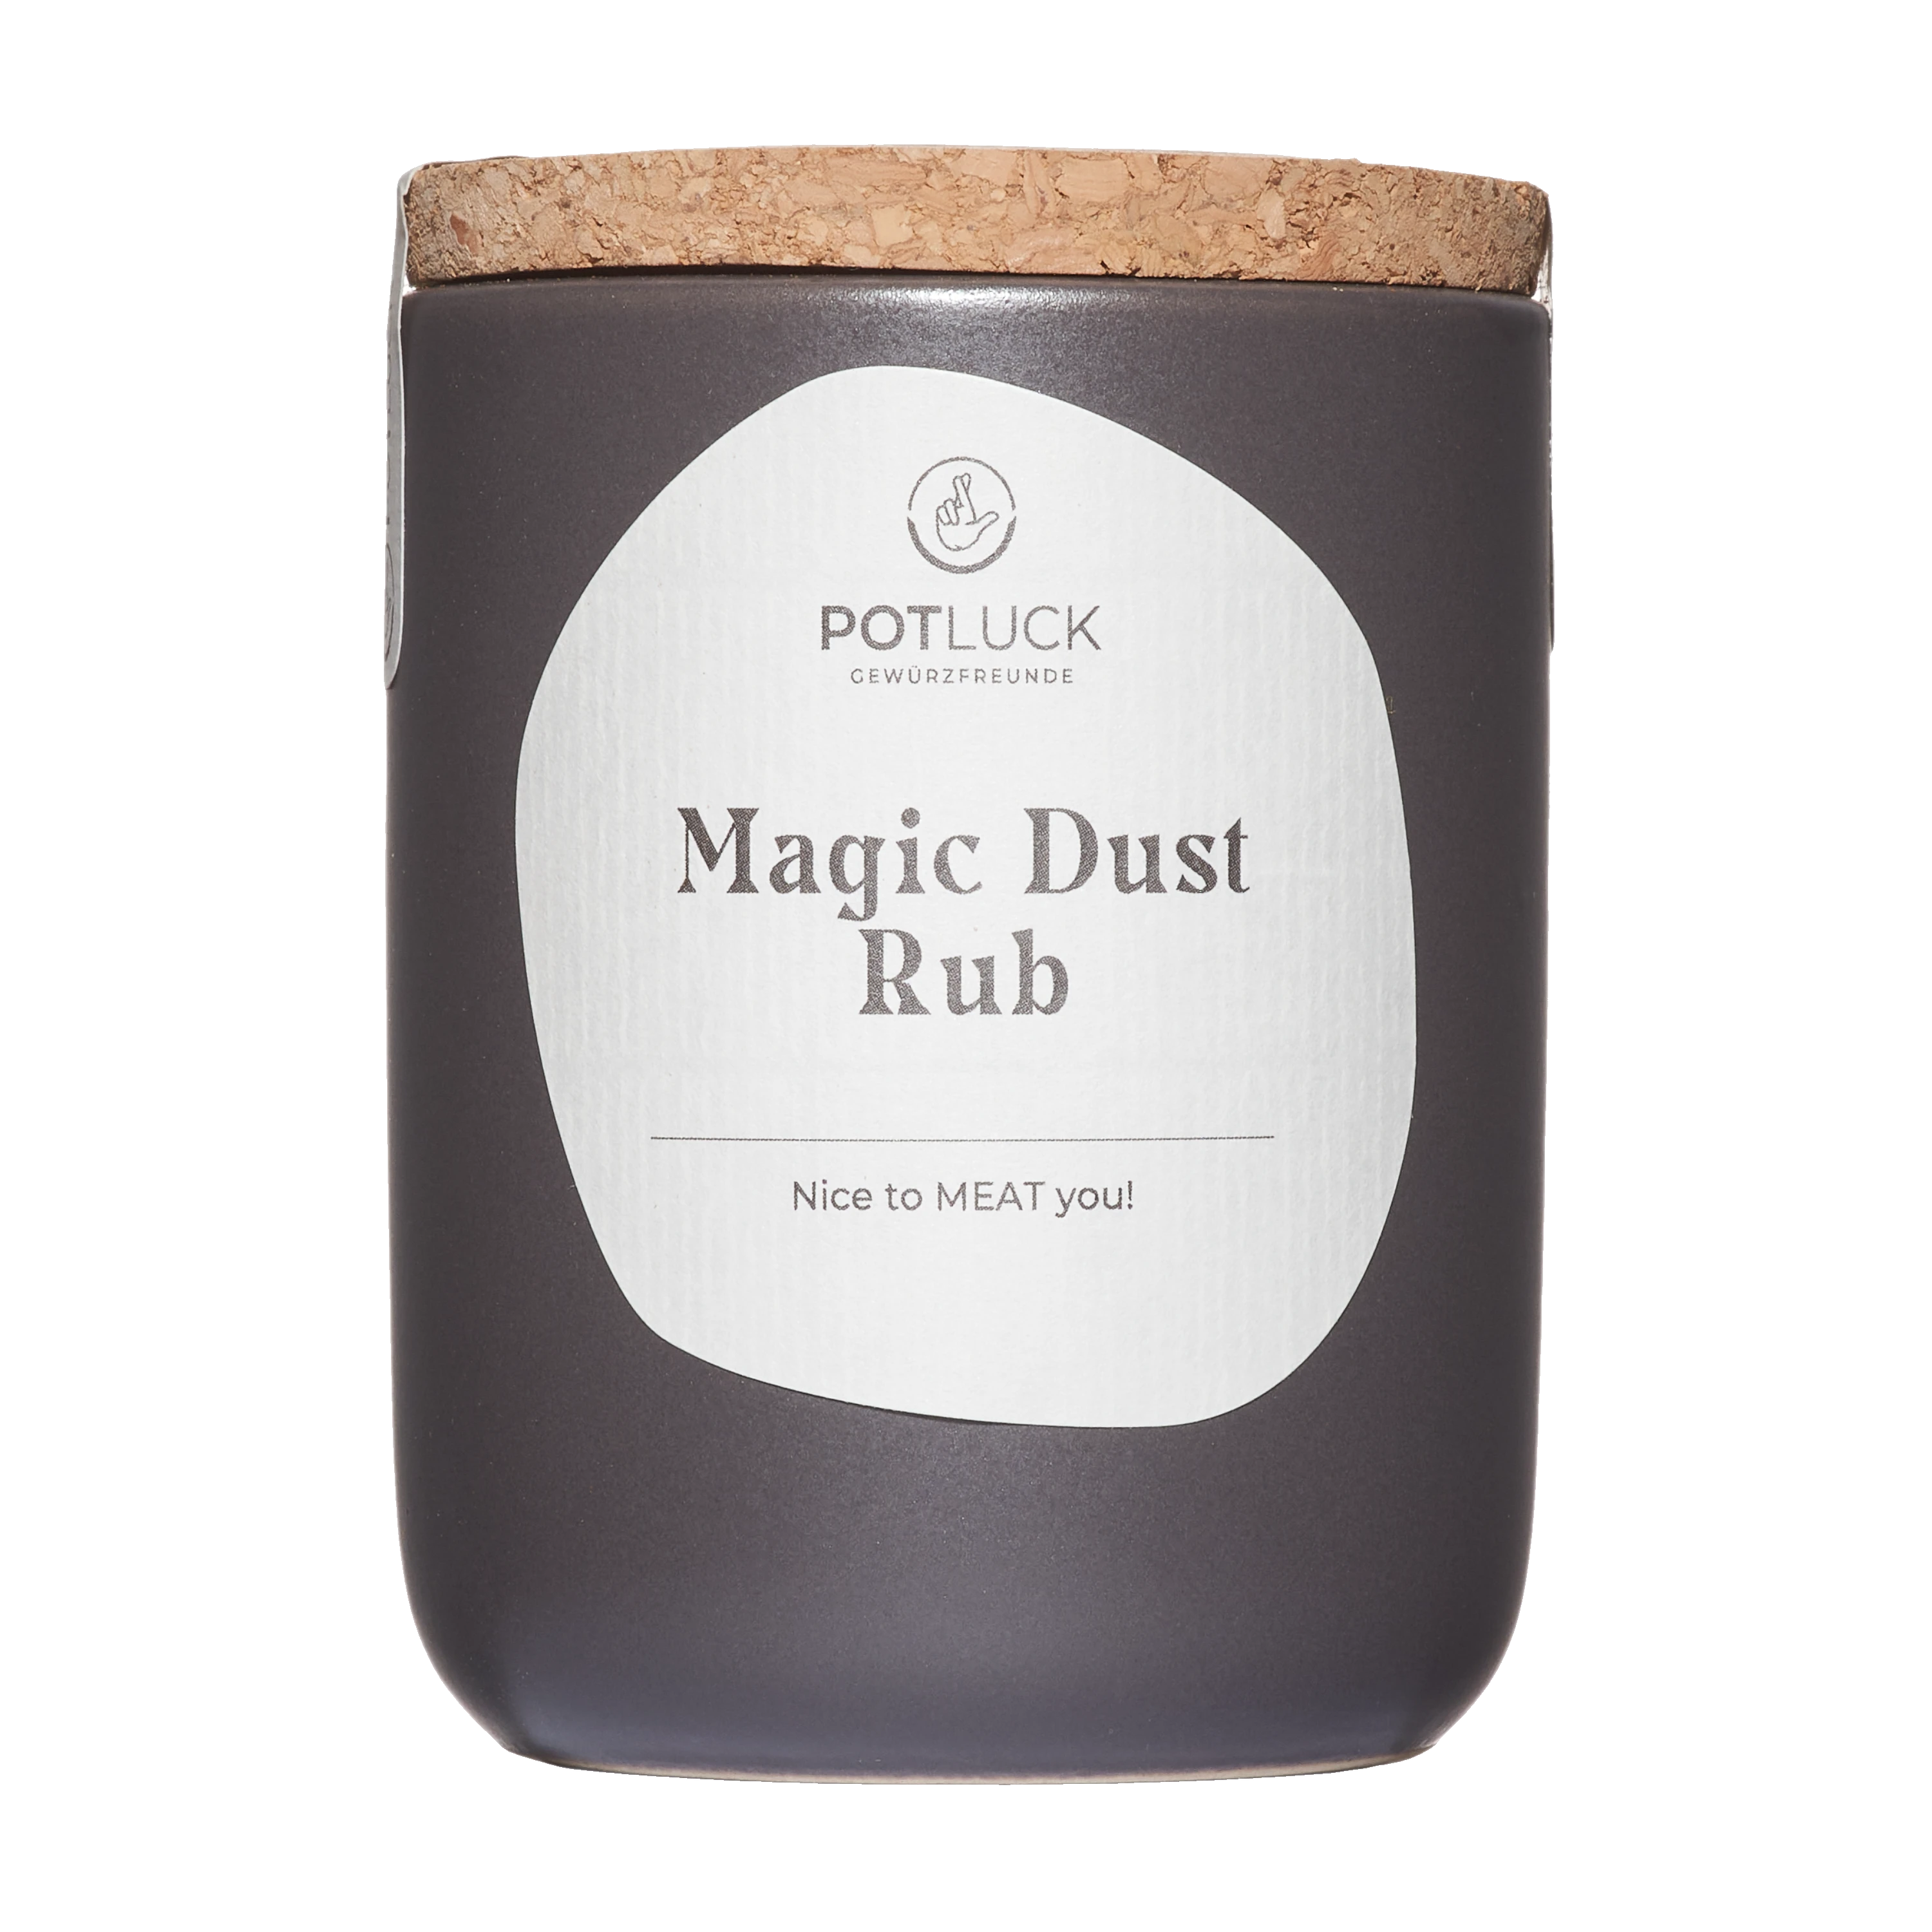 Potluck Magic Dust Rub 1